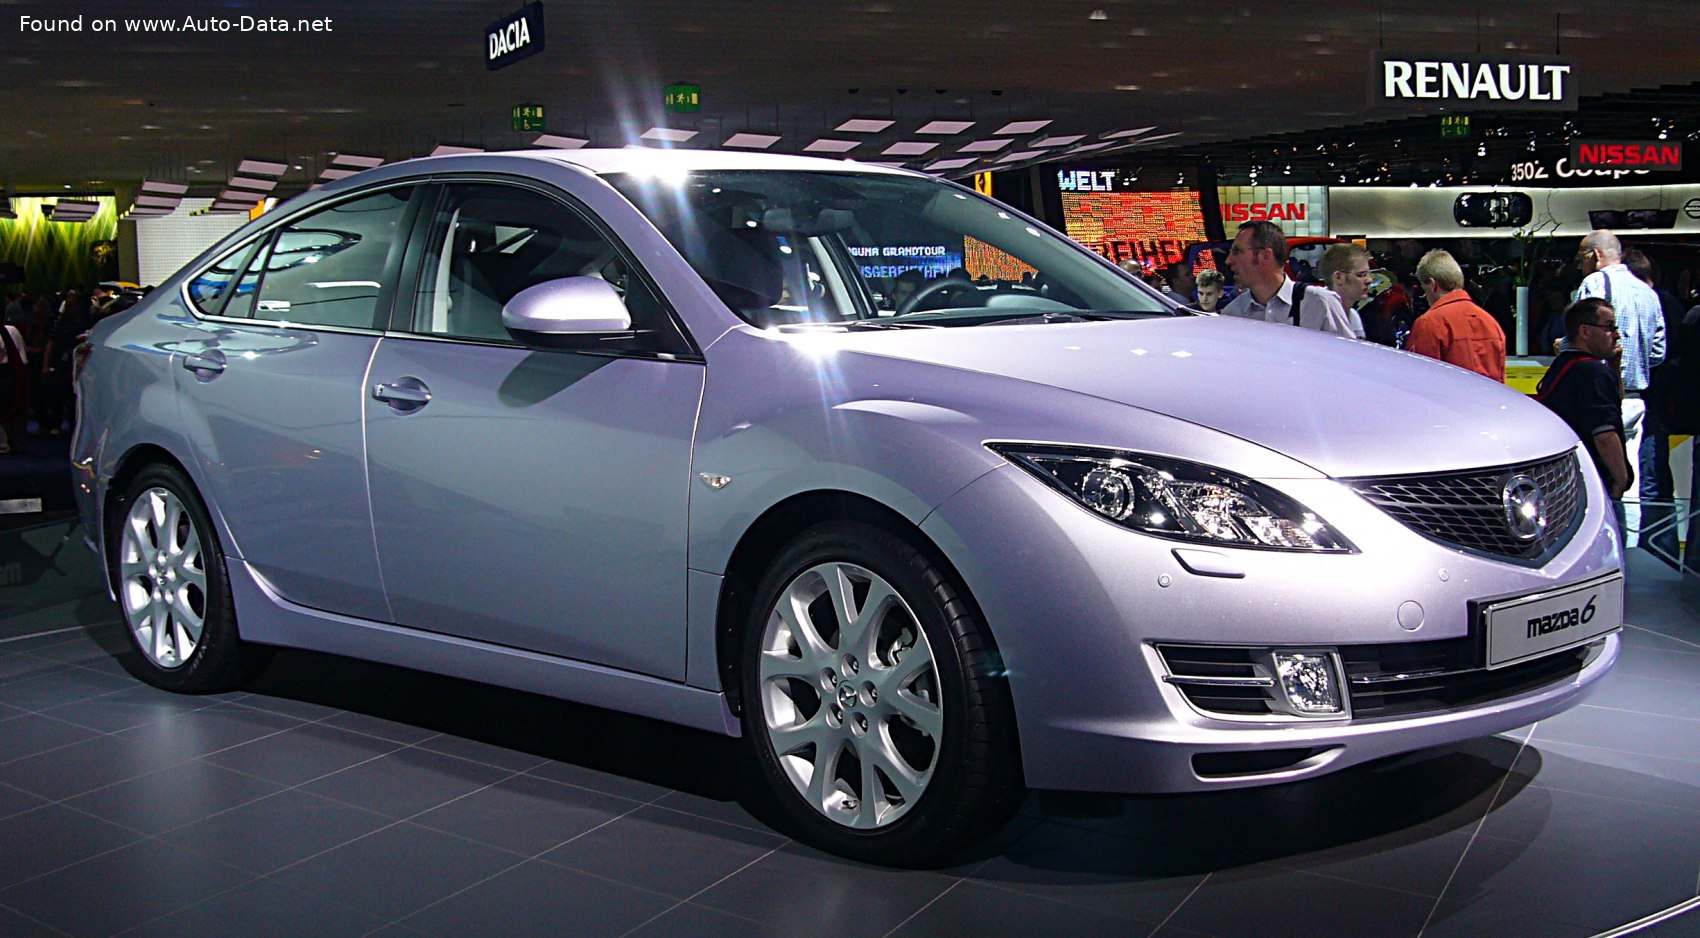 2007 Mazda 6 II Hatchback (GH) 1.8 (120 Hp)  Technical specs, data, fuel  consumption, Dimensions